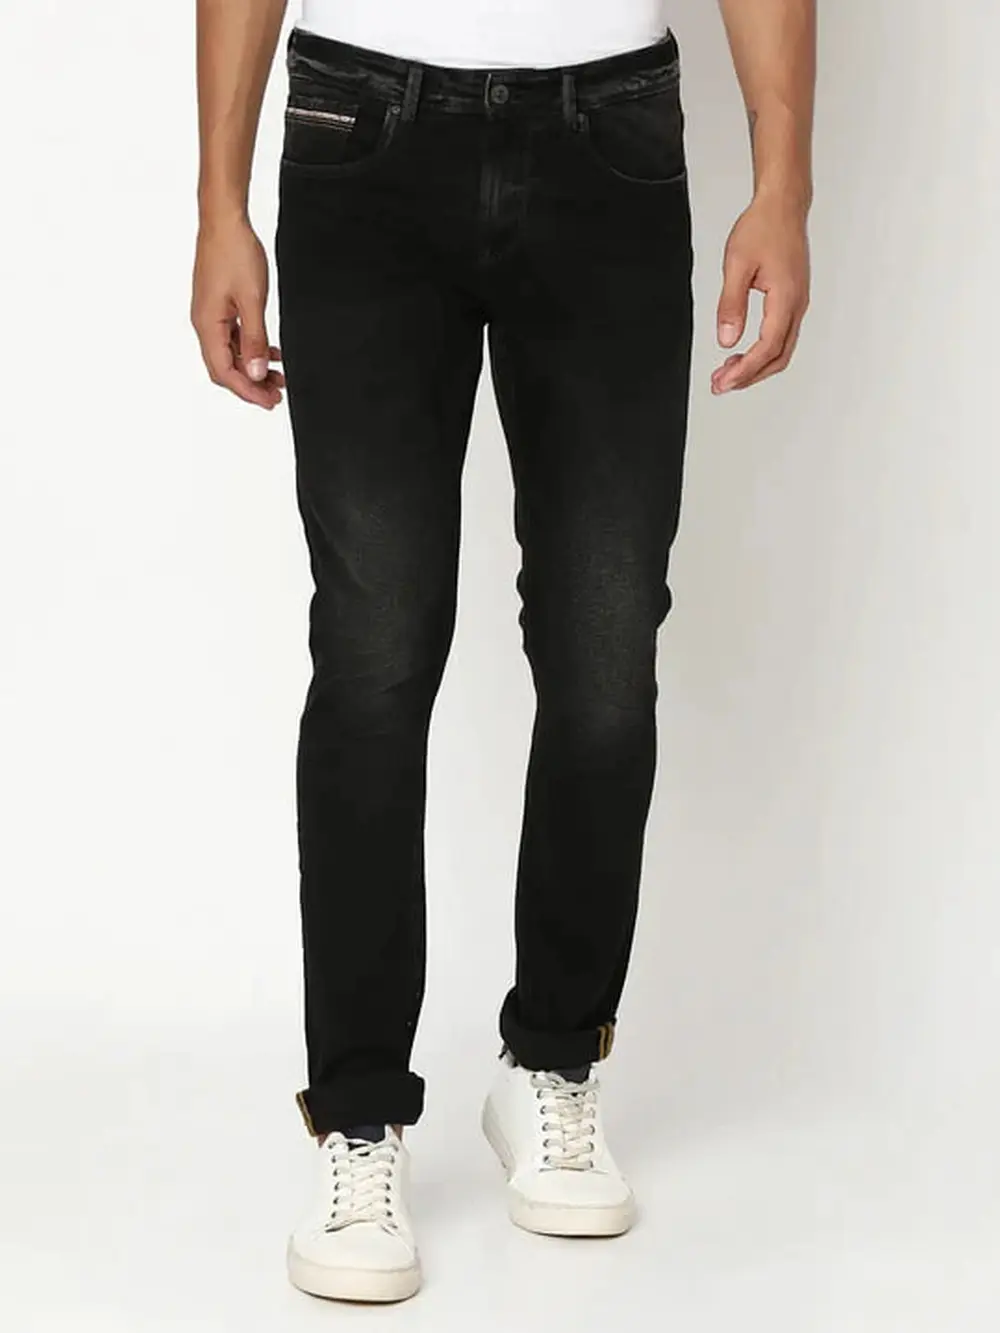 Spykar Men Carbon Black Cotton Slim Fit Narrow Length Clean Look Low Rise Stretchable Jeans (Skinny)